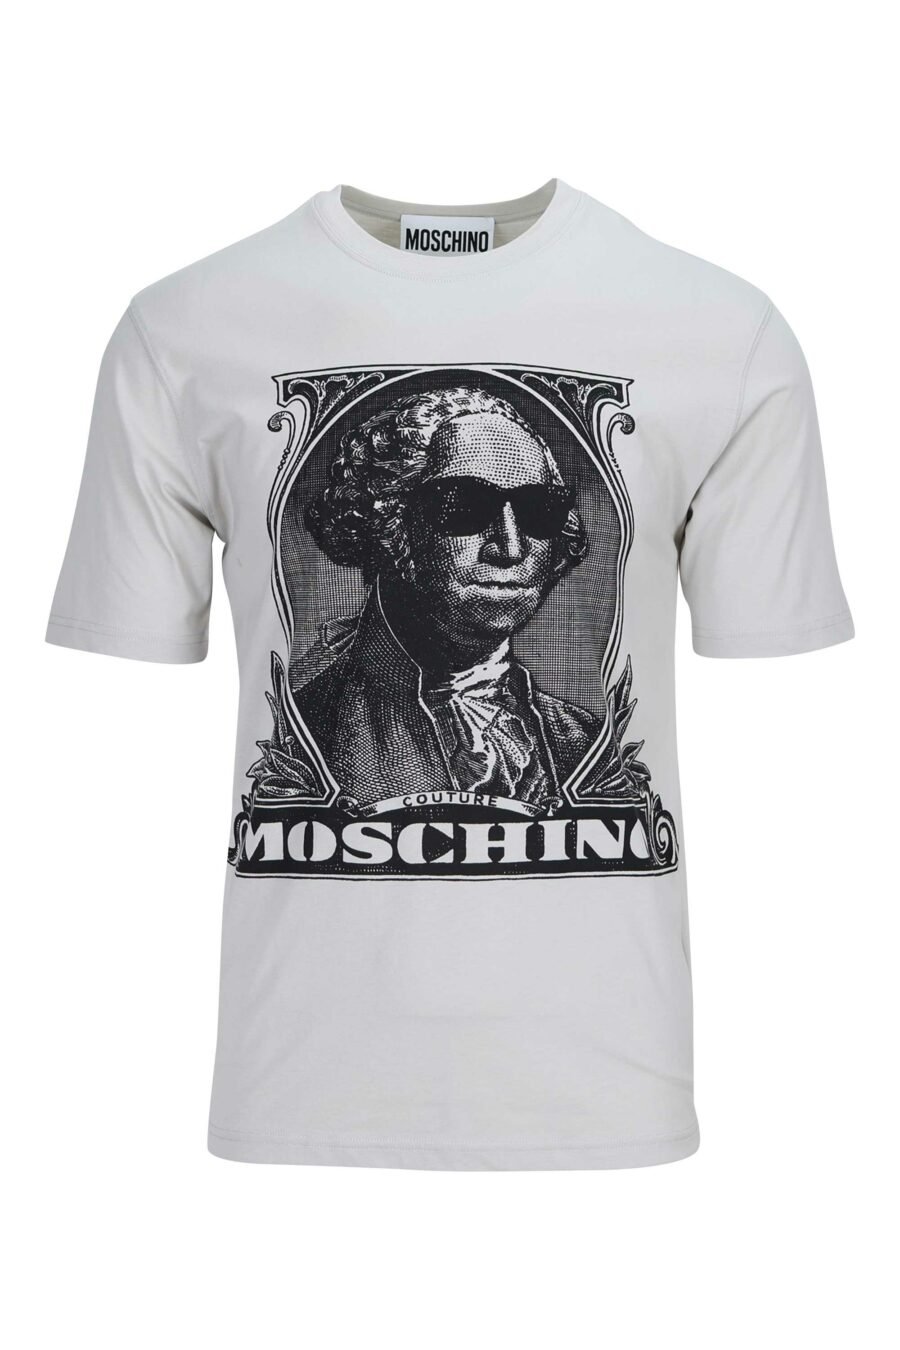 T-shirt grau mit Maxilogo "Moschino" Ticket - 889316954807